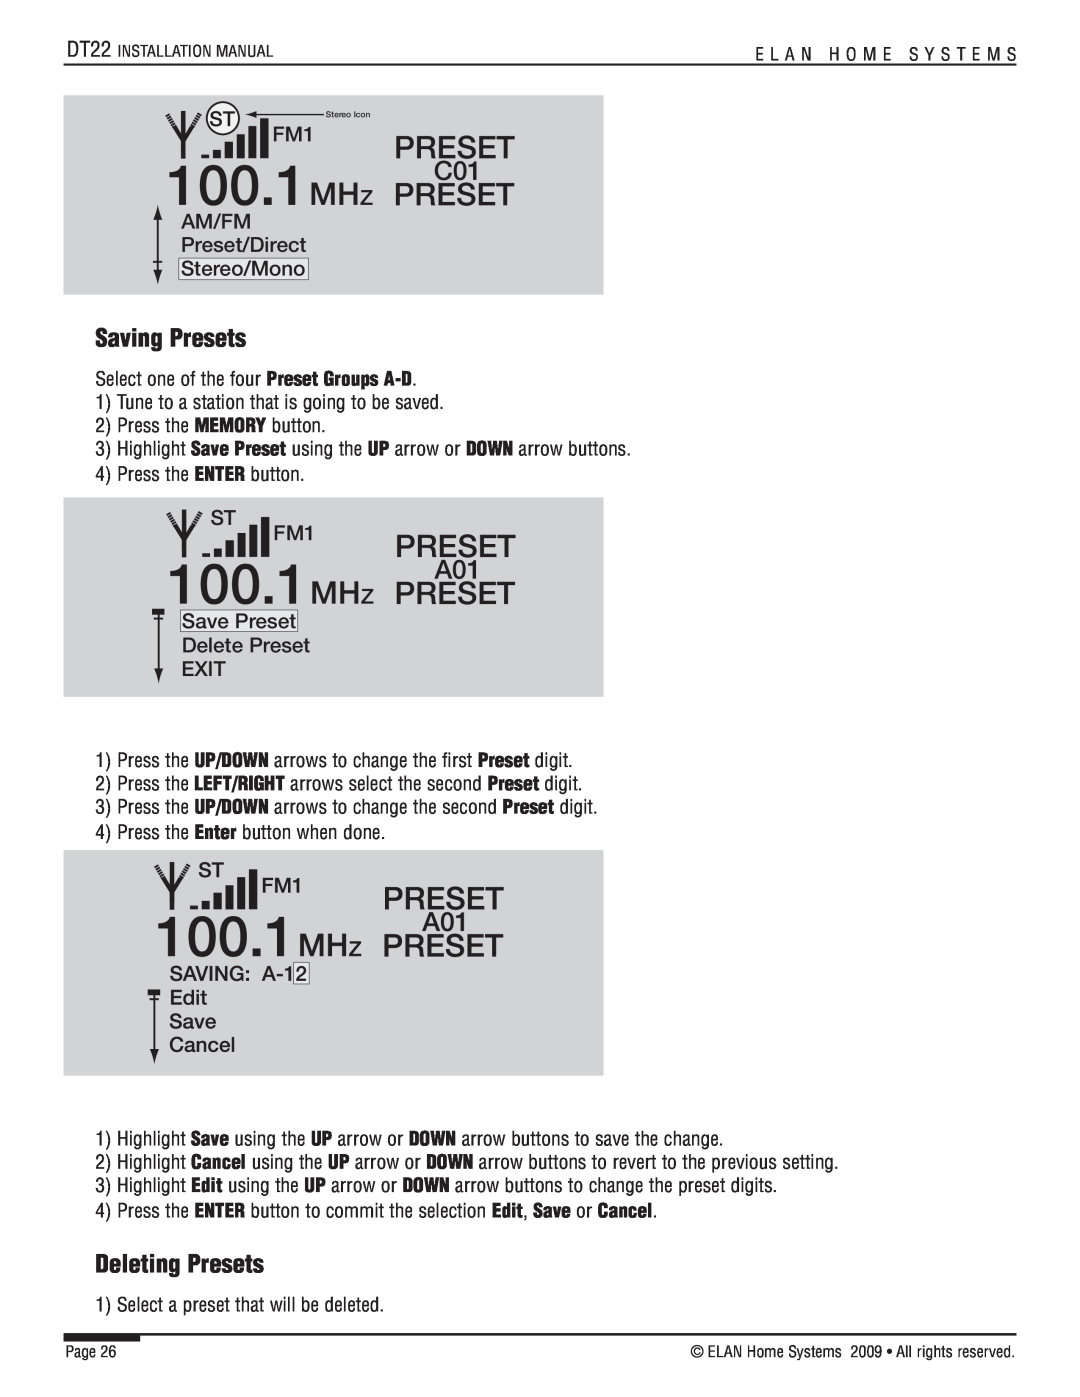 ELAN Home Systems DT22 manual Saving Presets, Deleting Presets, Save Preset Delete Preset EXIT, 100.1MHZ PRESET 